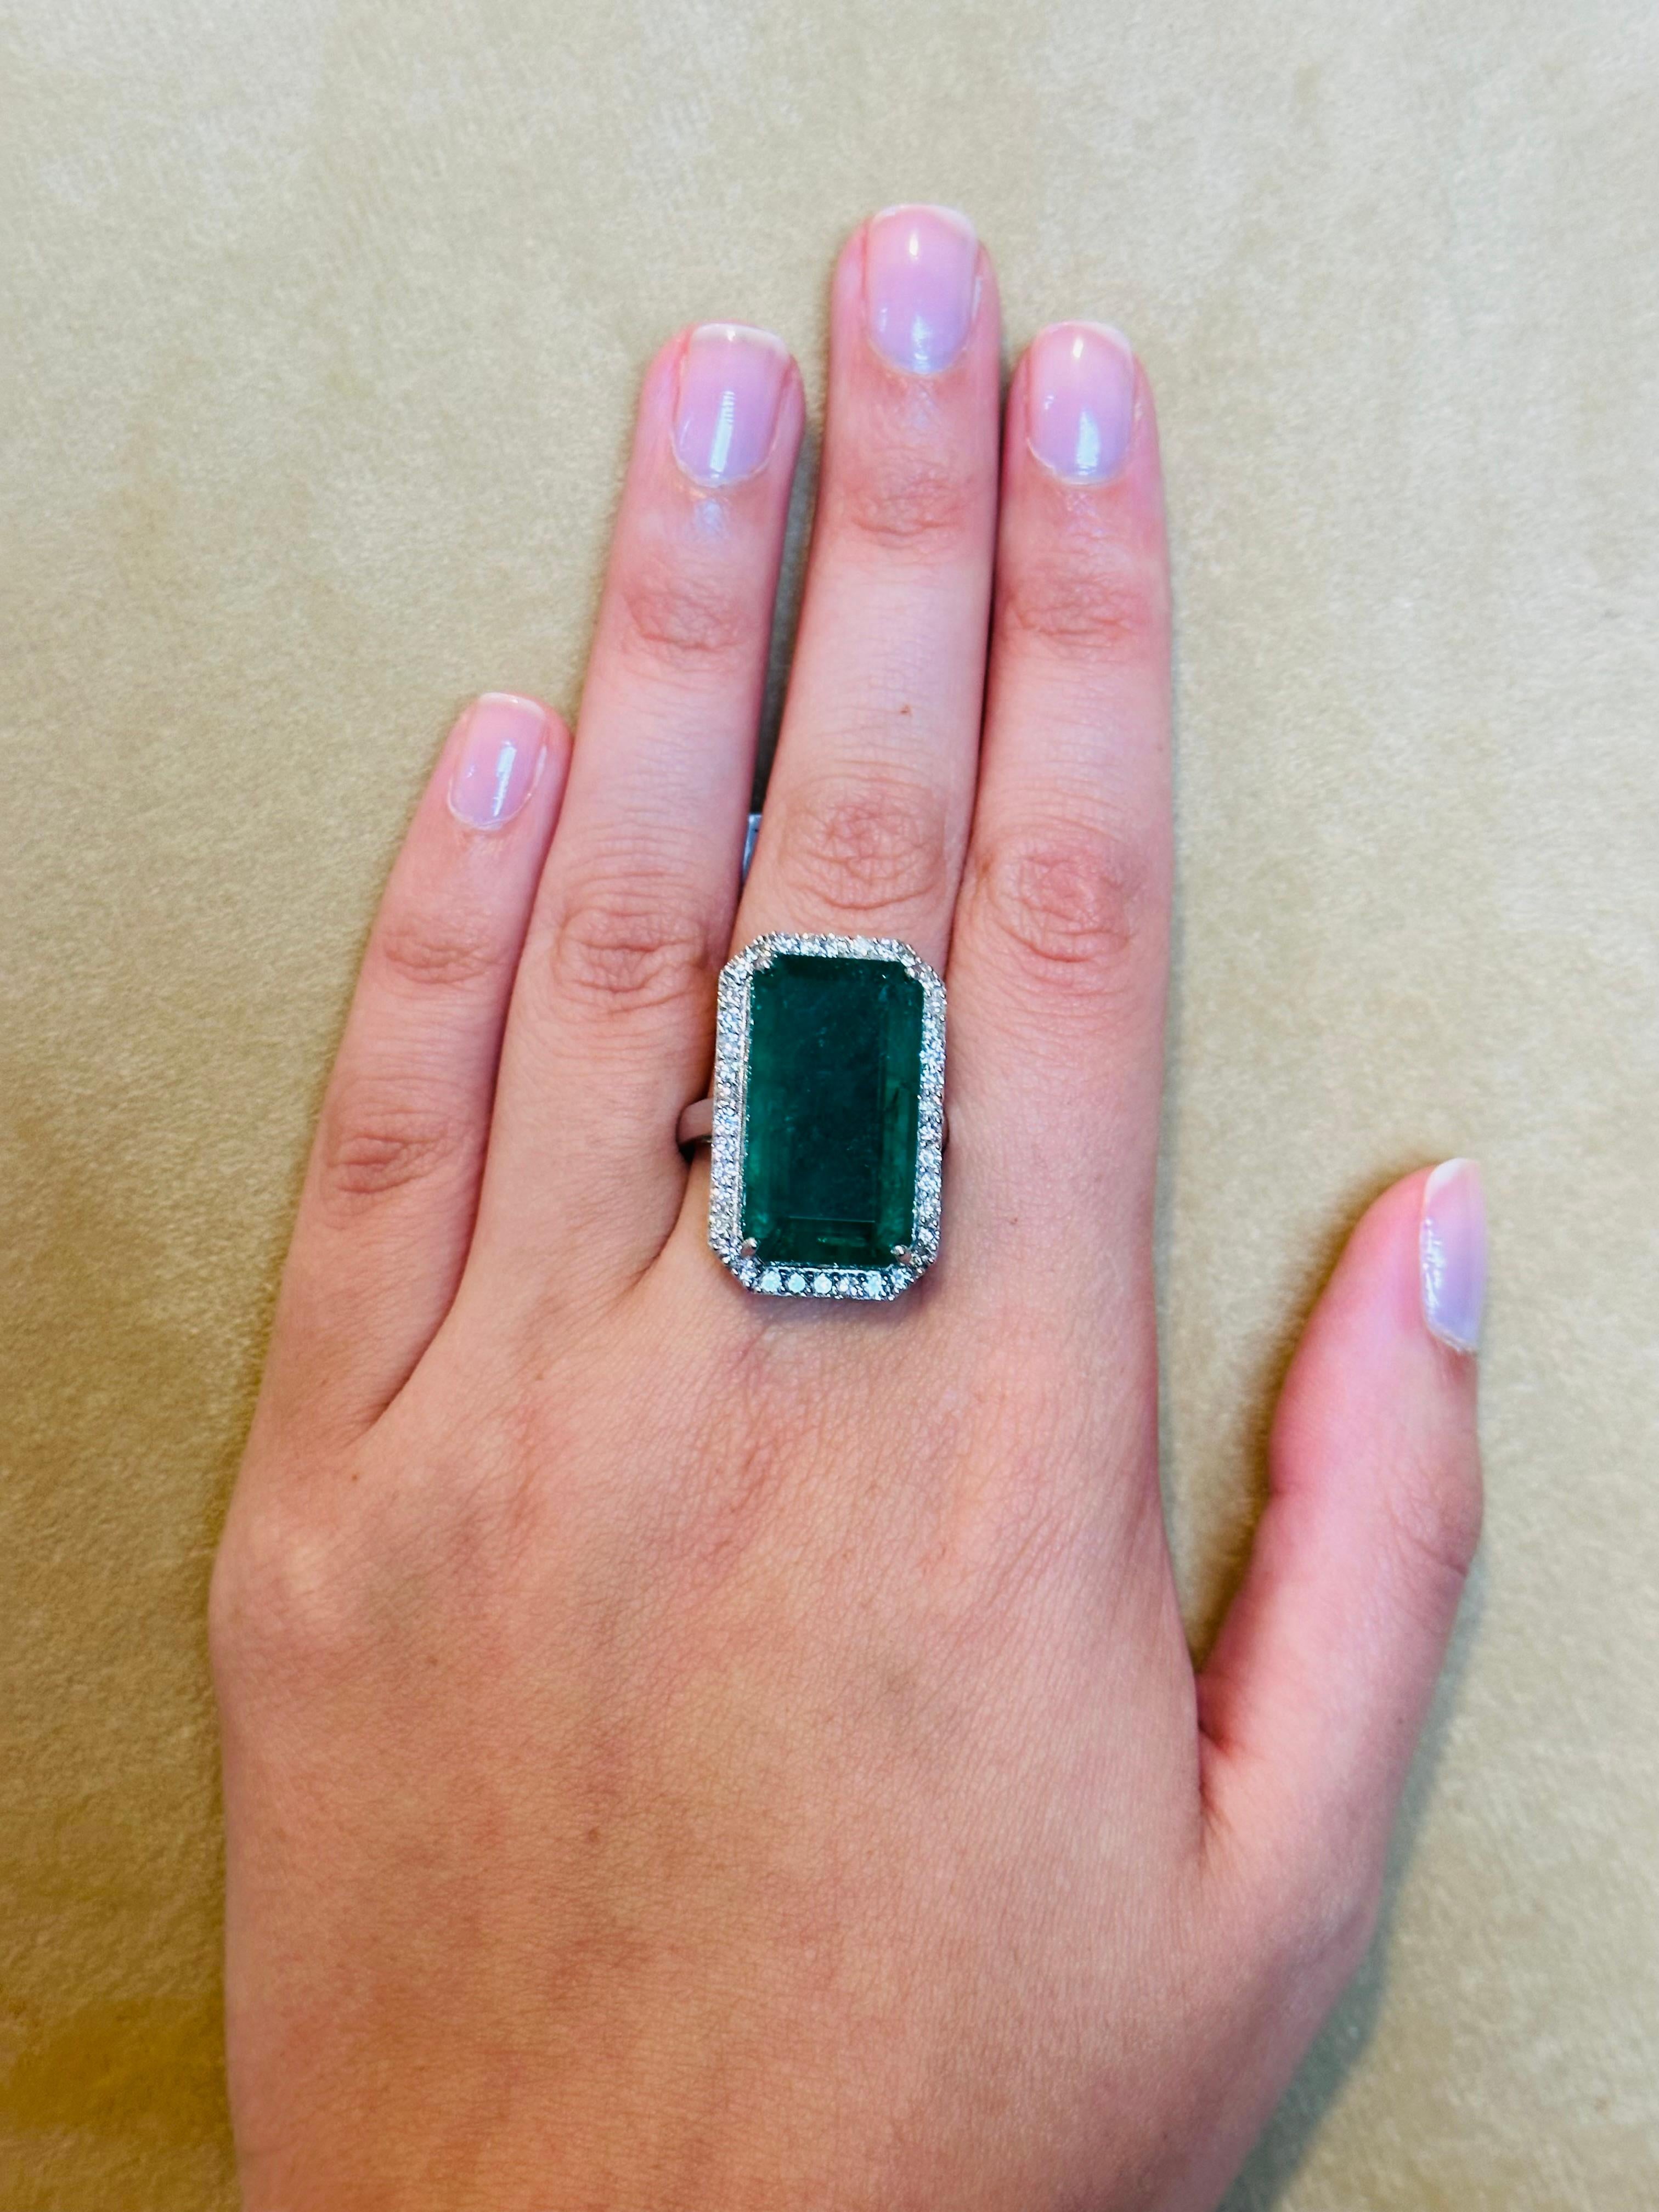 Natural 16 Carat Emerald Cut Zambian Emerald & Diamond Ring in 14kt White Gold For Sale 6